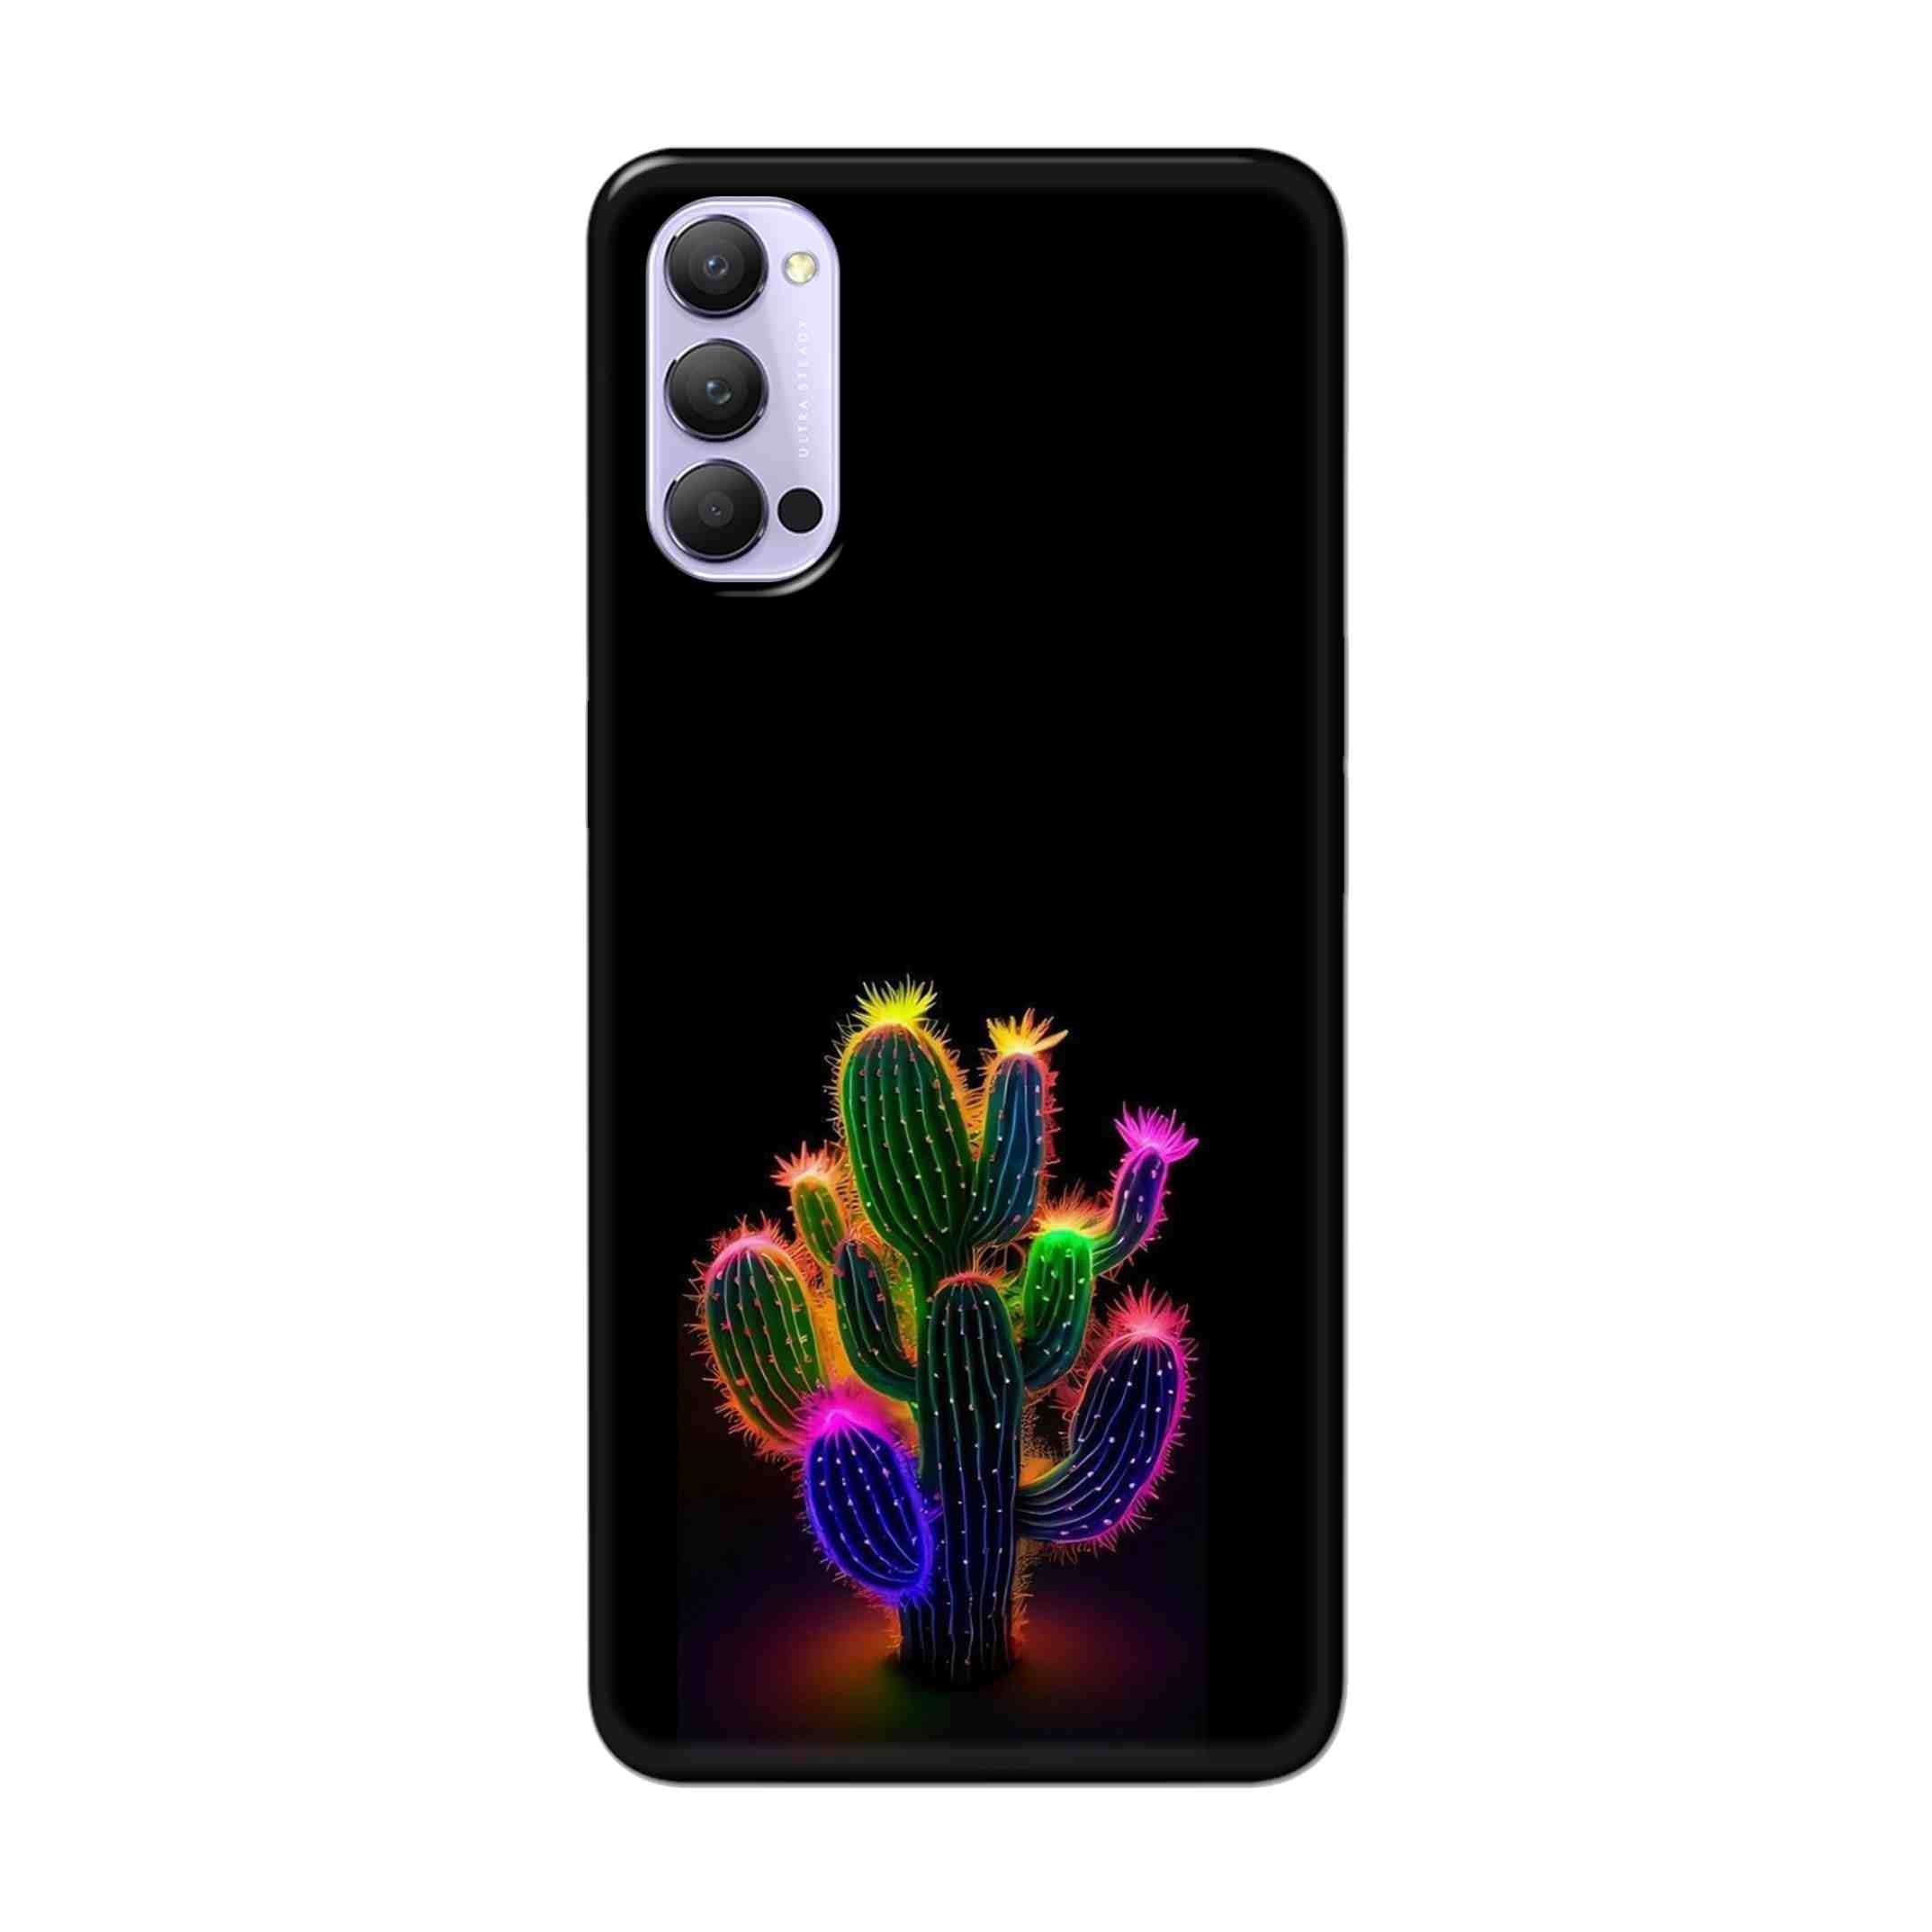 Buy Neon Flower Hard Back Mobile Phone Case Cover For Oppo Reno 4 Pro Online